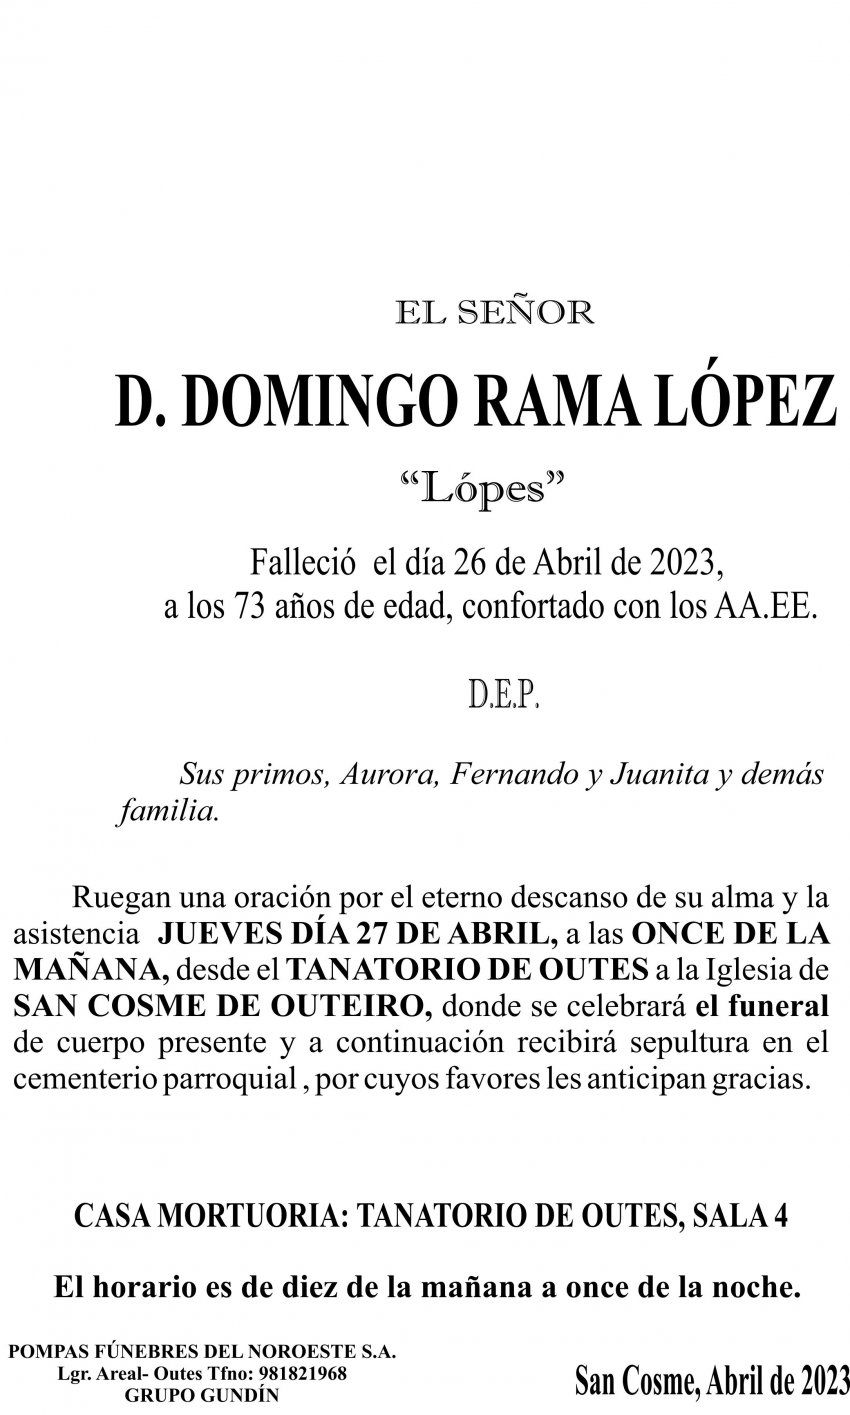 ESQUELA 23, Domingo RAma López